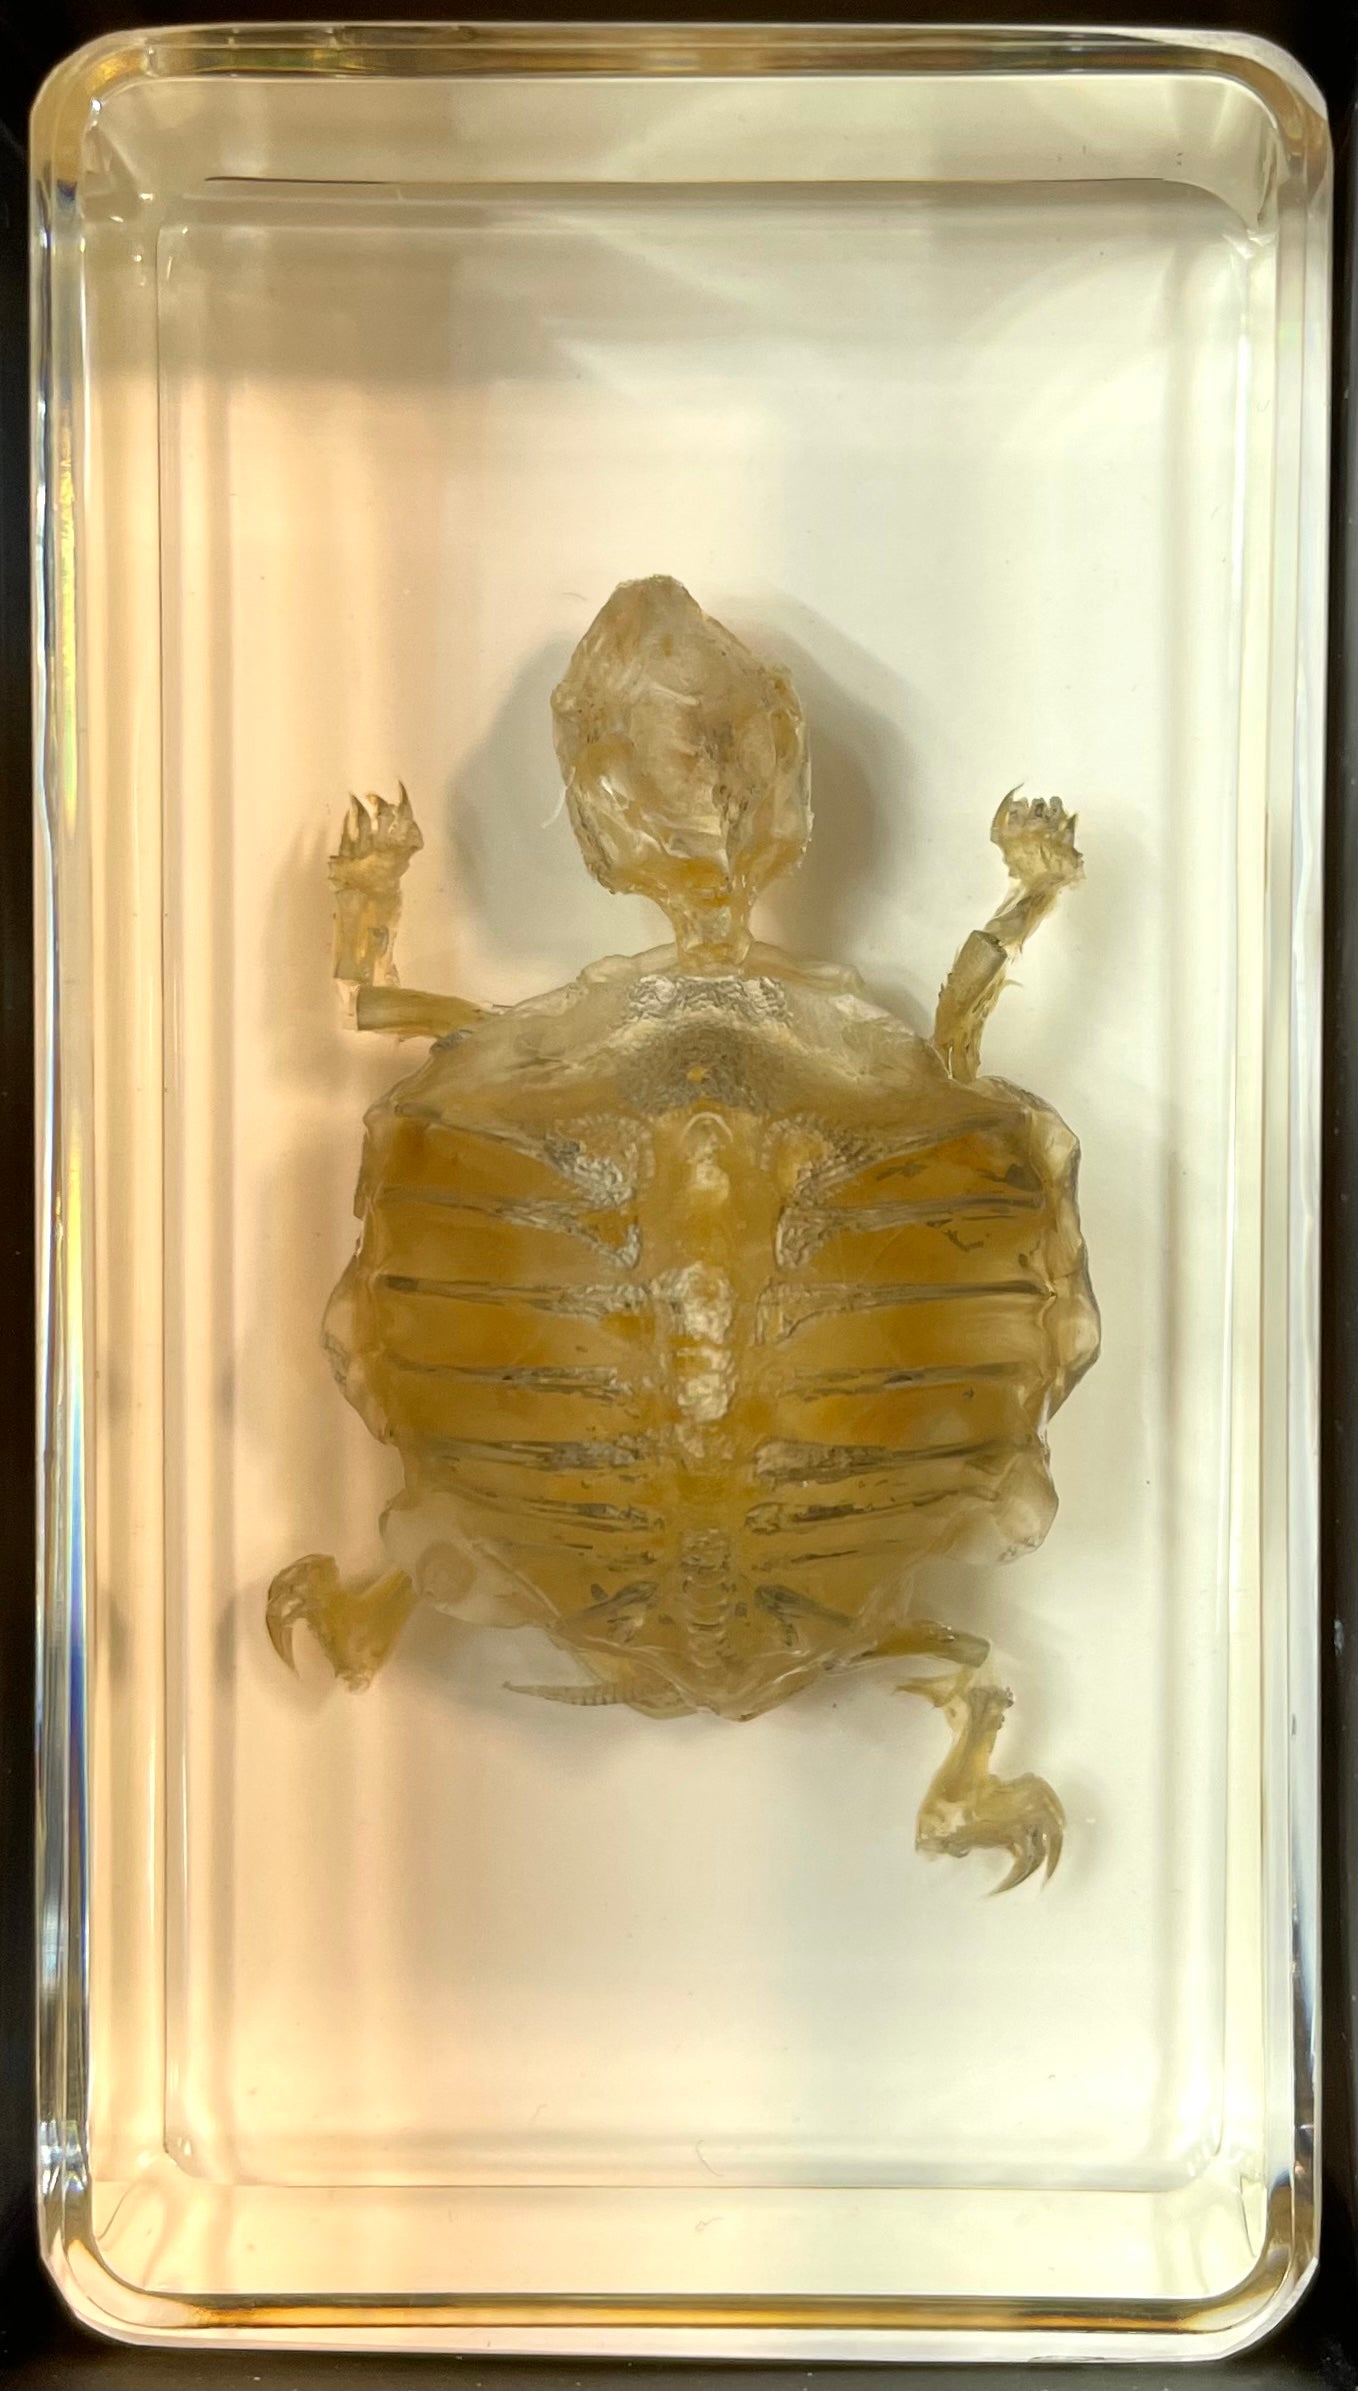 HOT Resin Skeleton Decor Fishing Skeleton Adornment Garden Fishing Skeleton